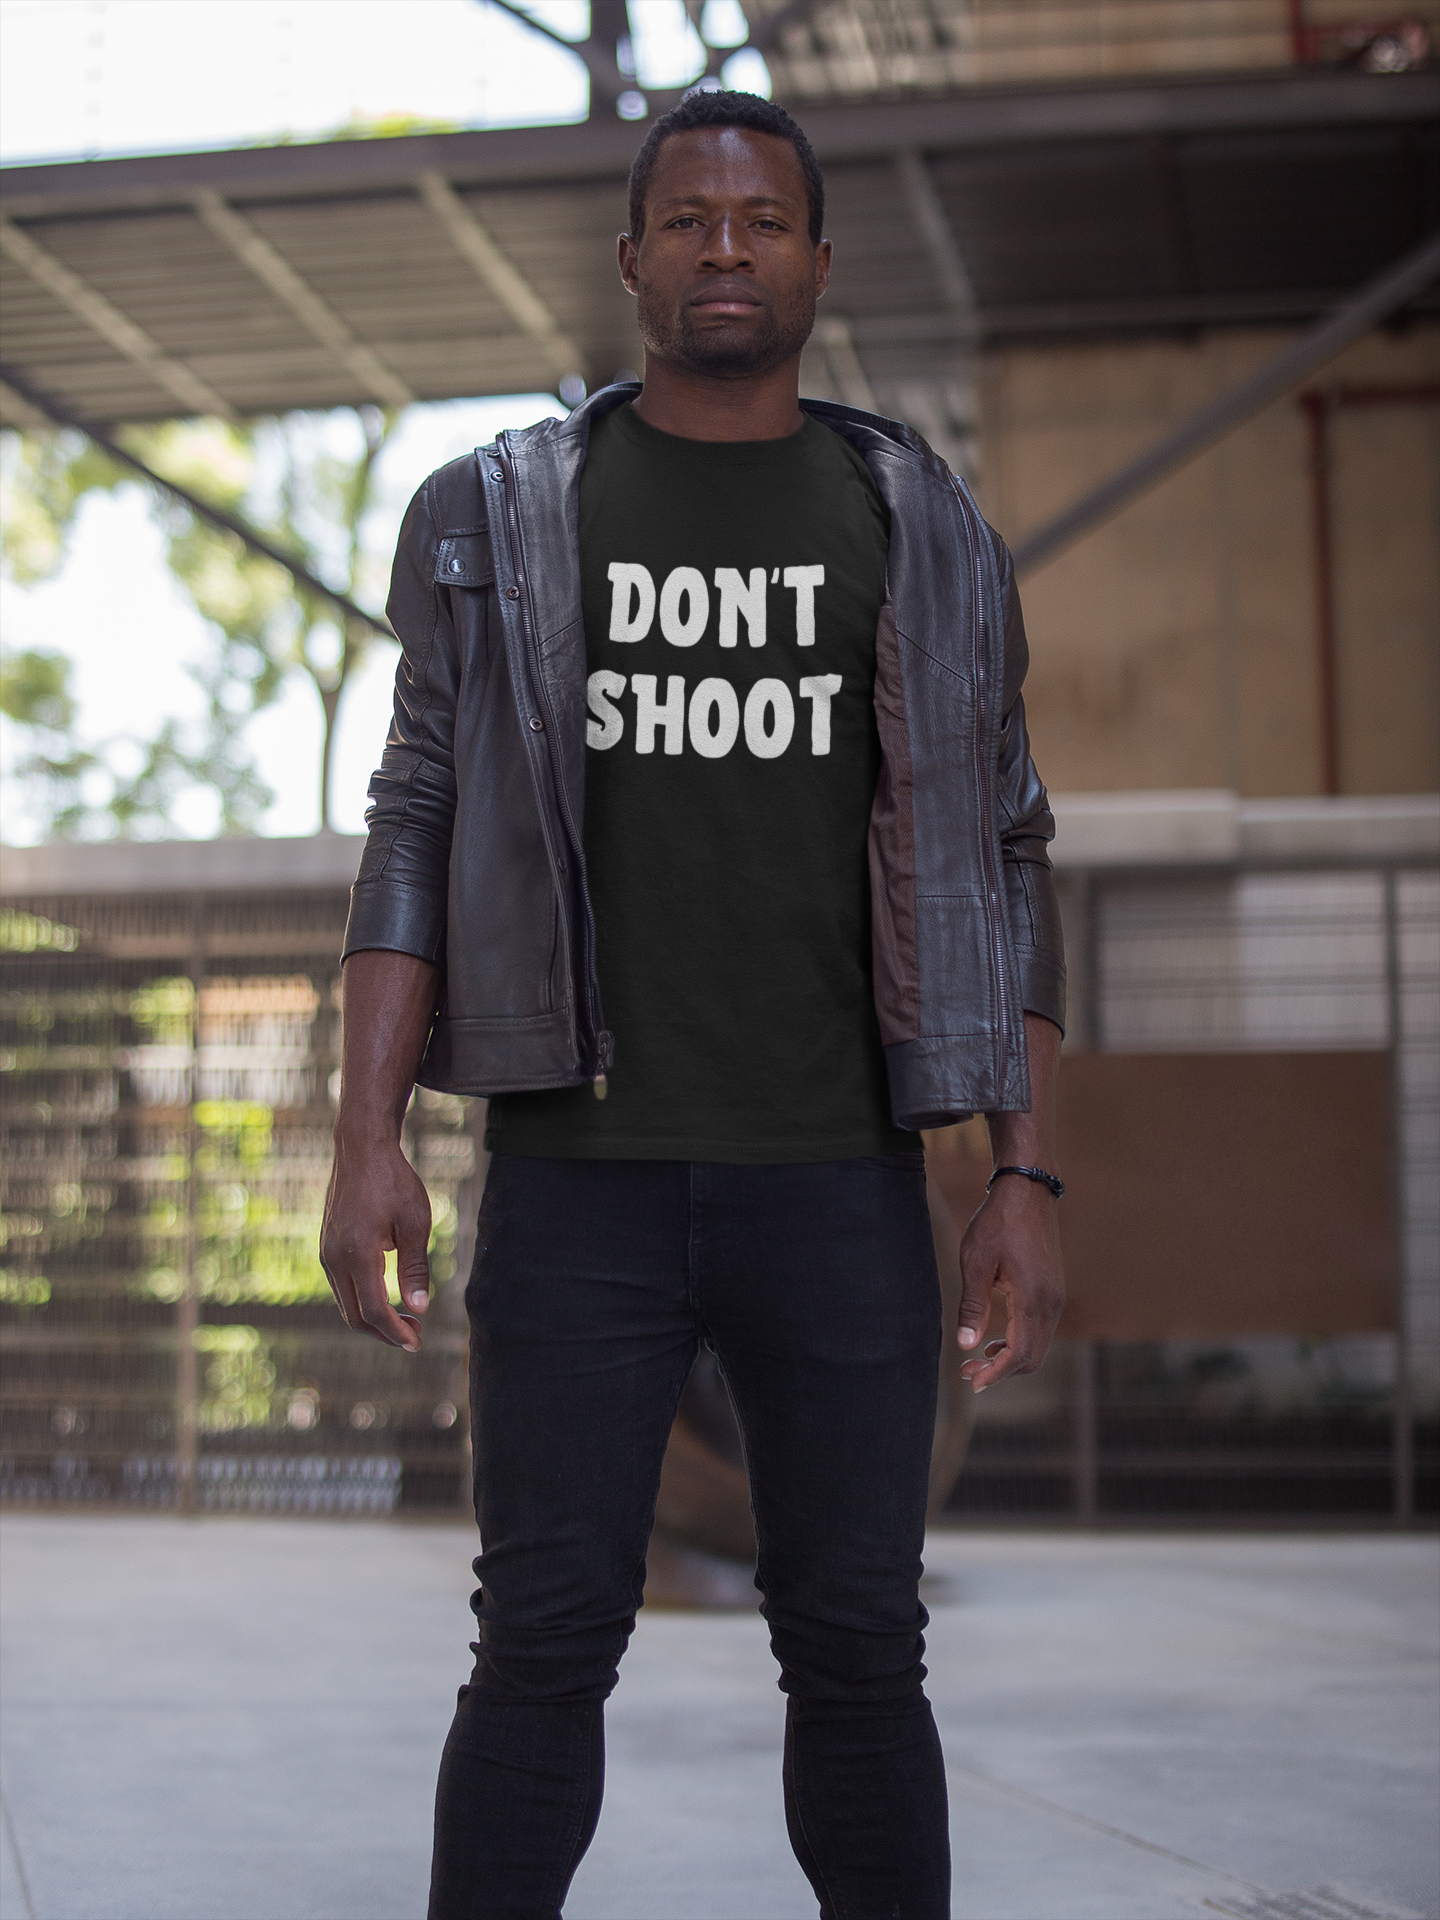 Don't Shoot Black Lives Matter Shirt - Funny Labrador Cute Shirt Labradors Labs